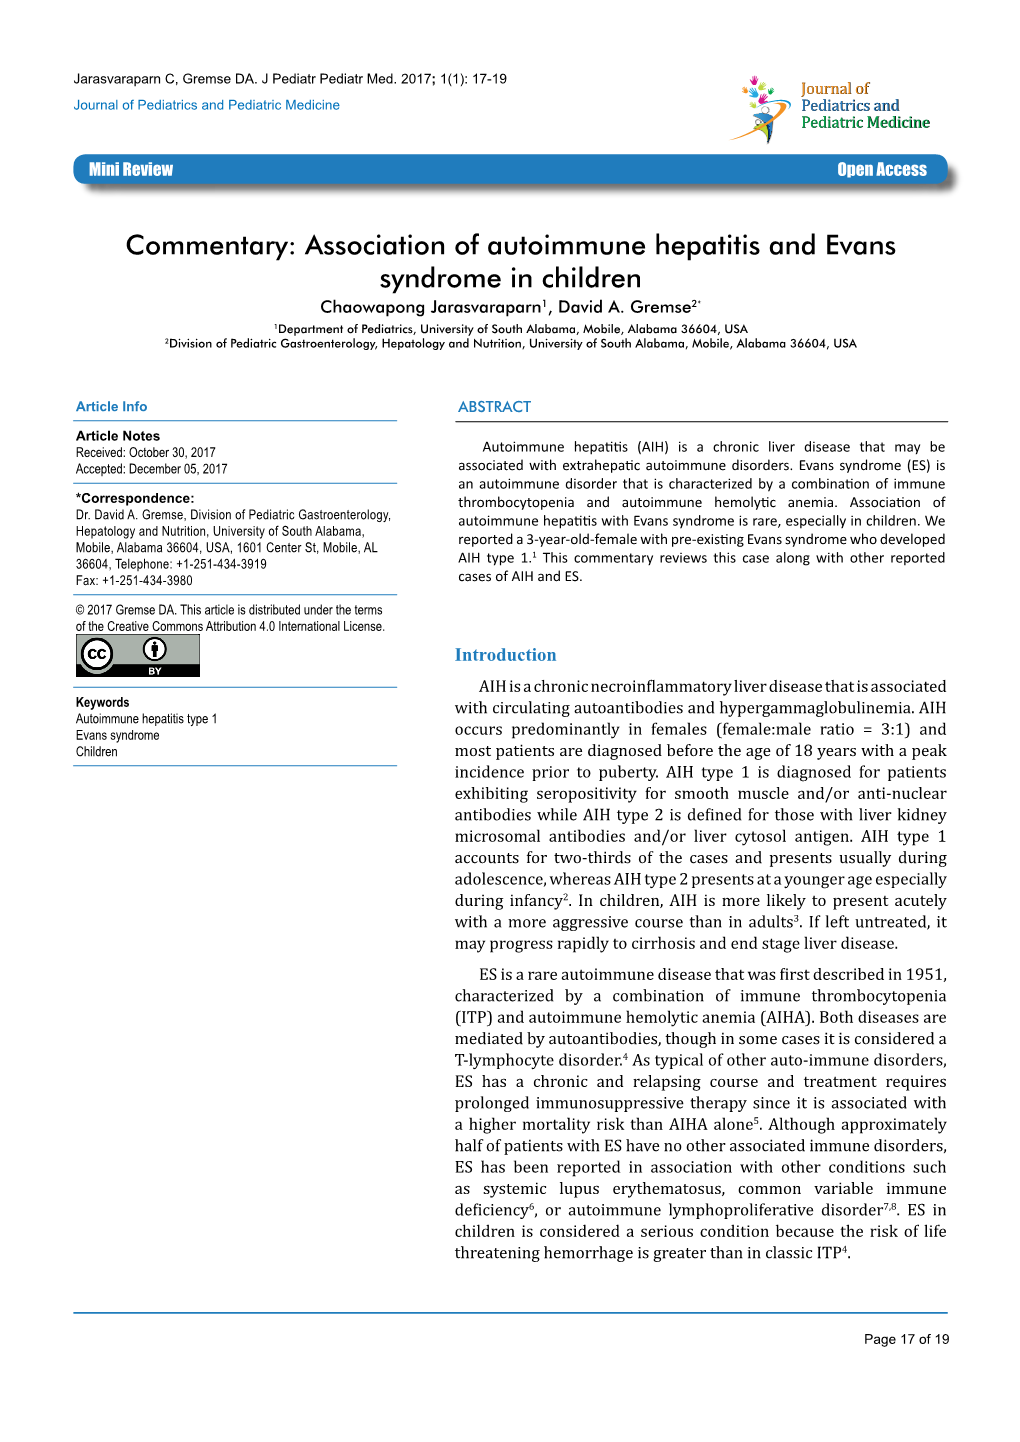 Association of Autoimmune Hepatitis and Evans Syndrome in Children Chaowapong Jarasvaraparn1, David A